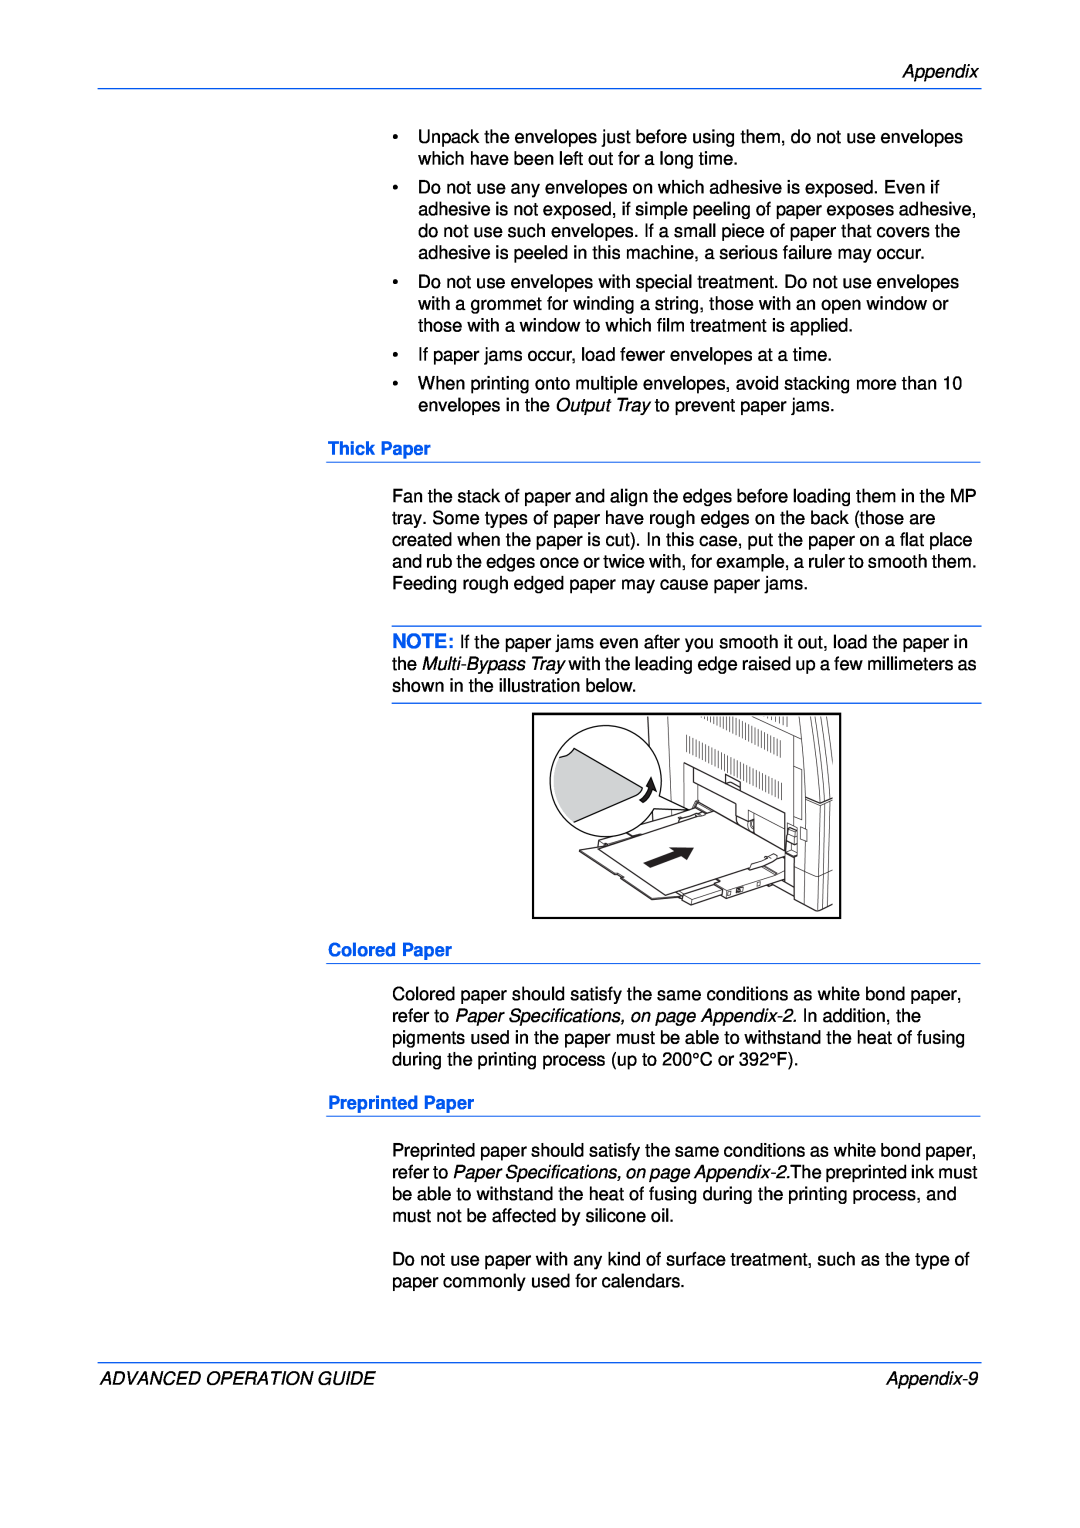 Epson KM-2050, KM-1650, KM-2550 manual Thick Paper, Colored Paper, Preprinted Paper, Advanced Operation Guide, Appendix-9 